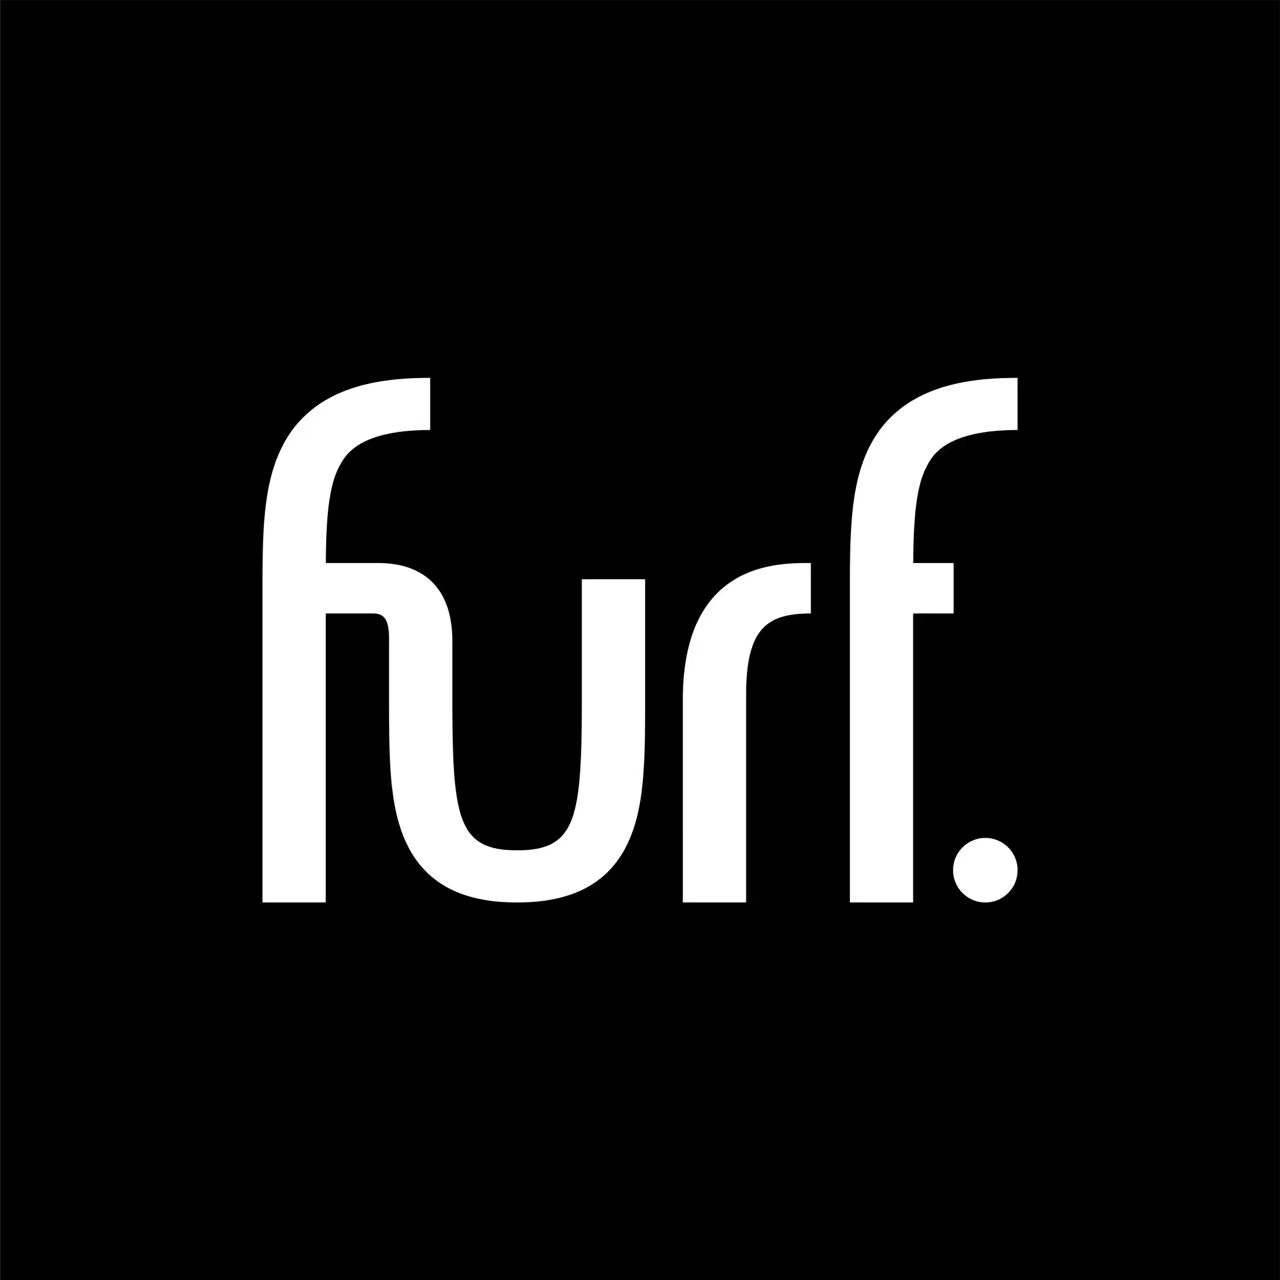 Furf Design Studio